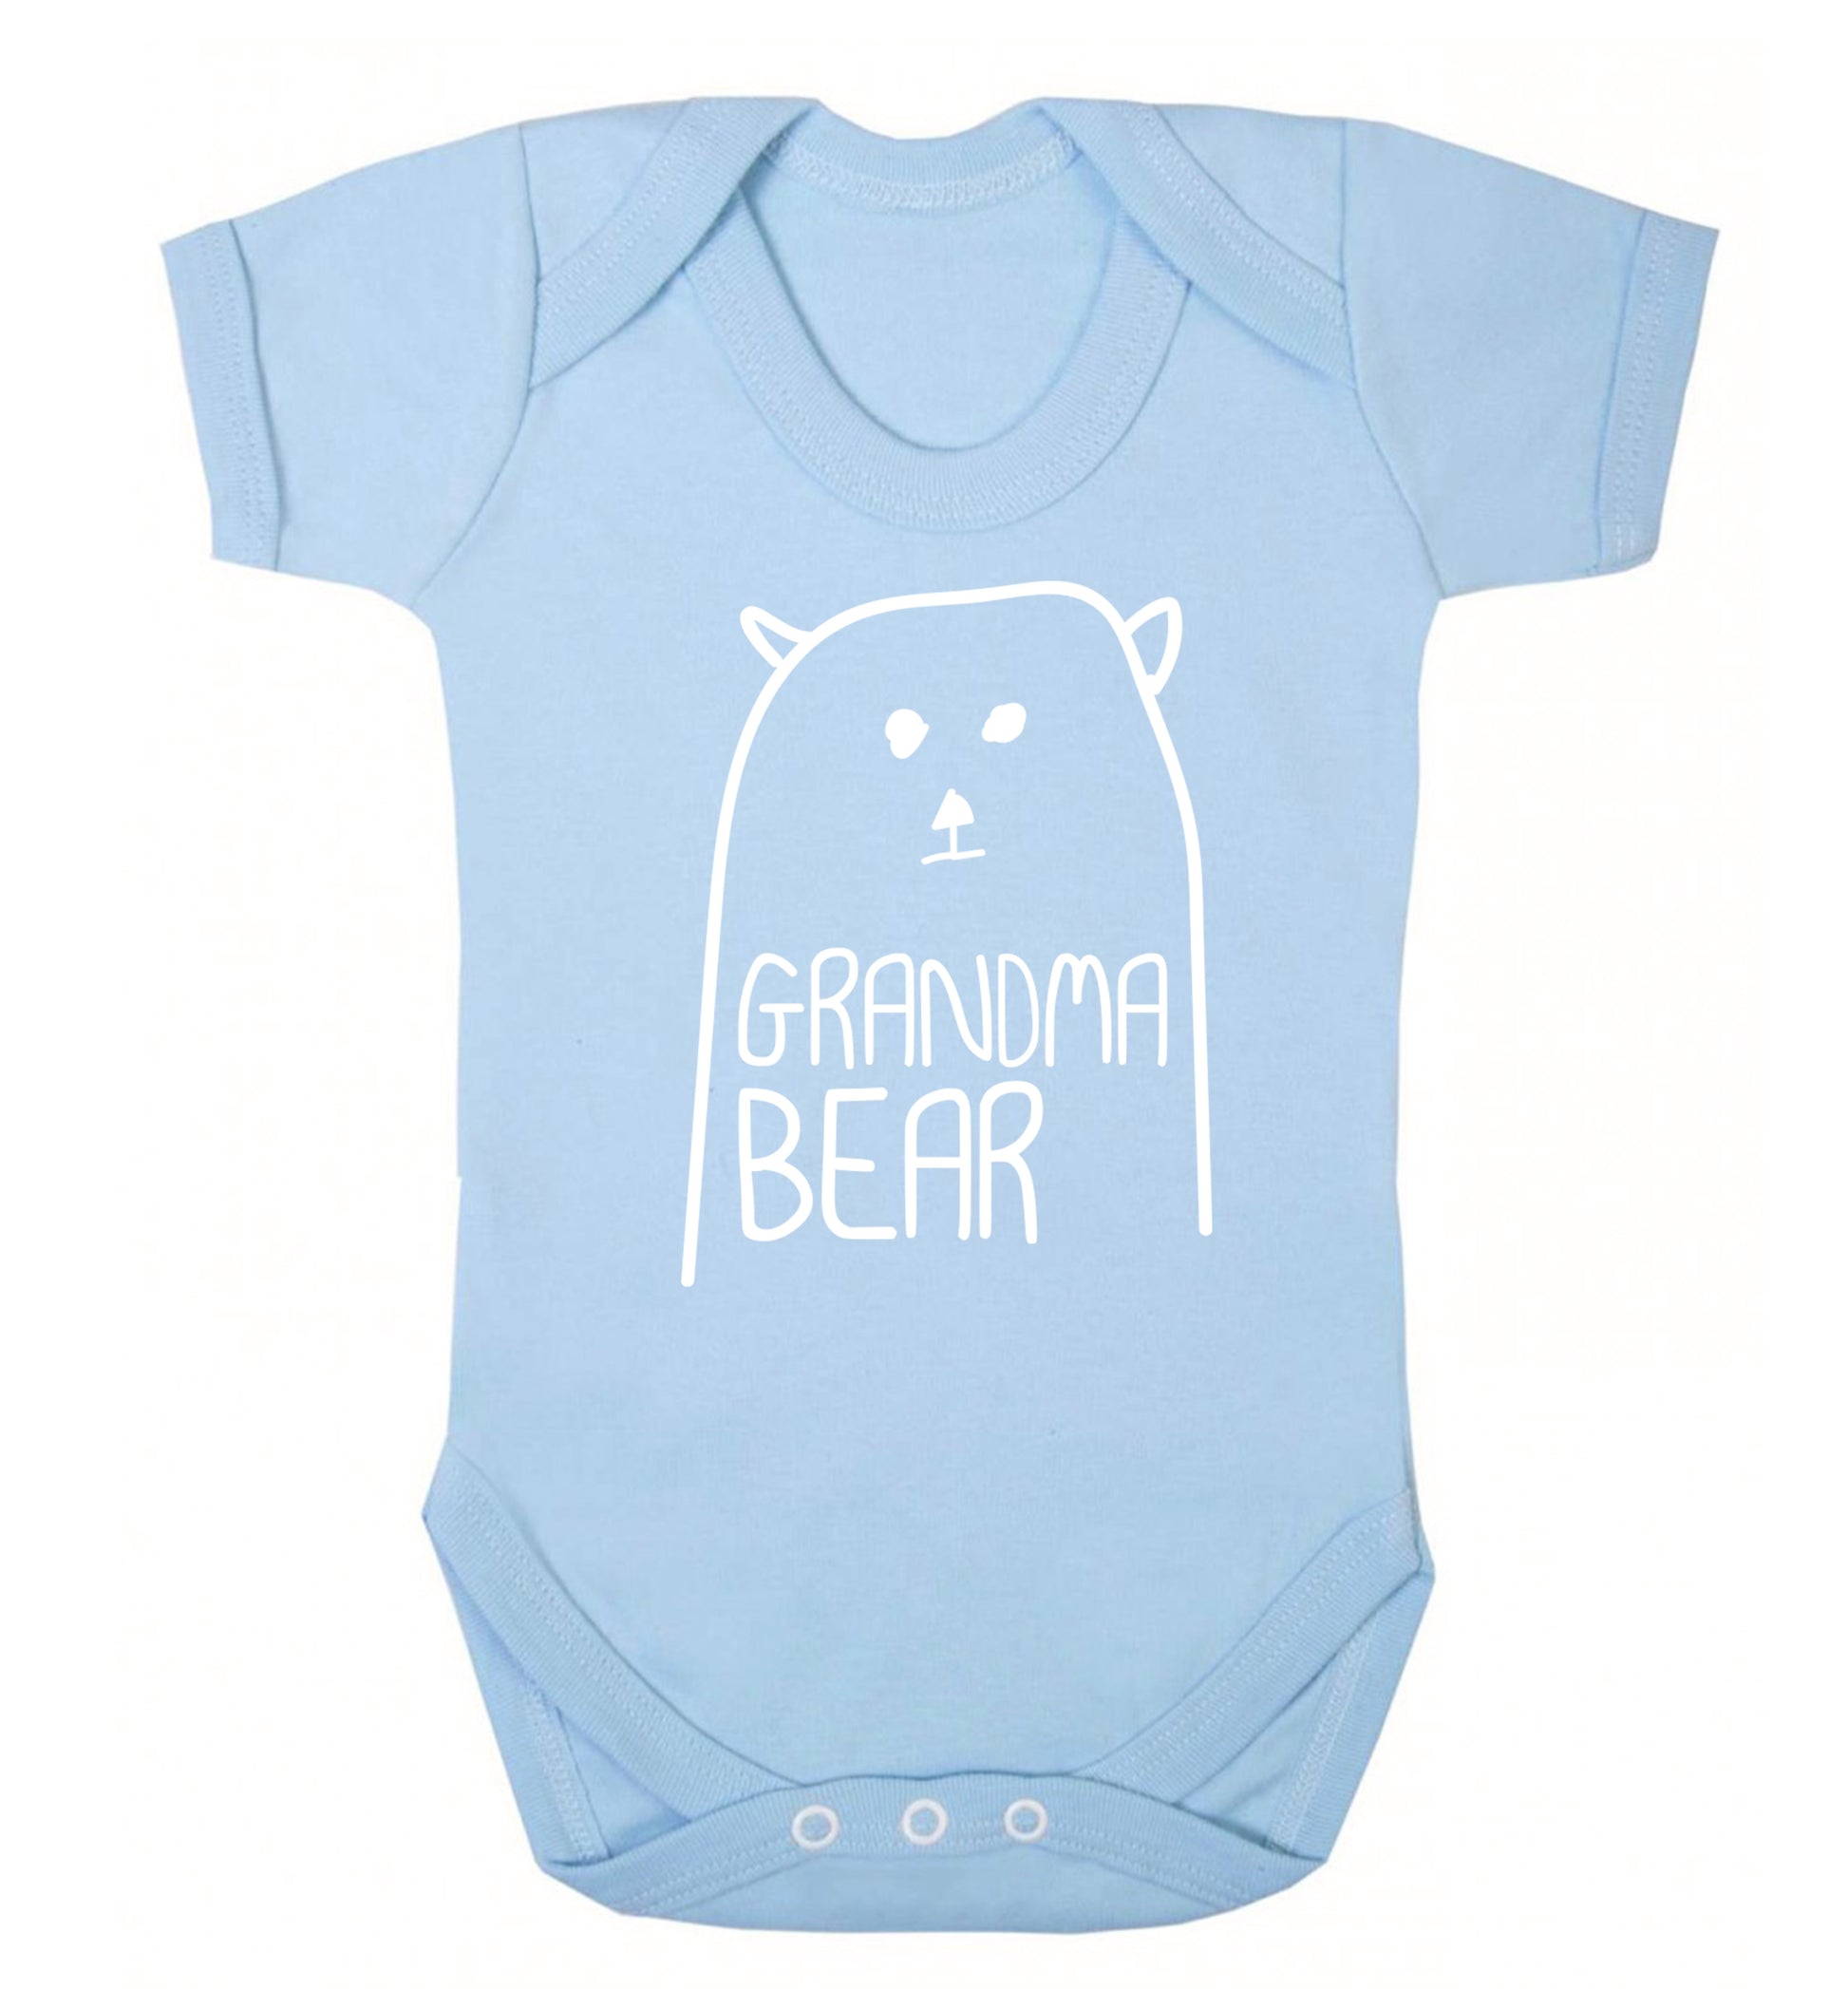 Grandma bear Baby Vest pale blue 18-24 months